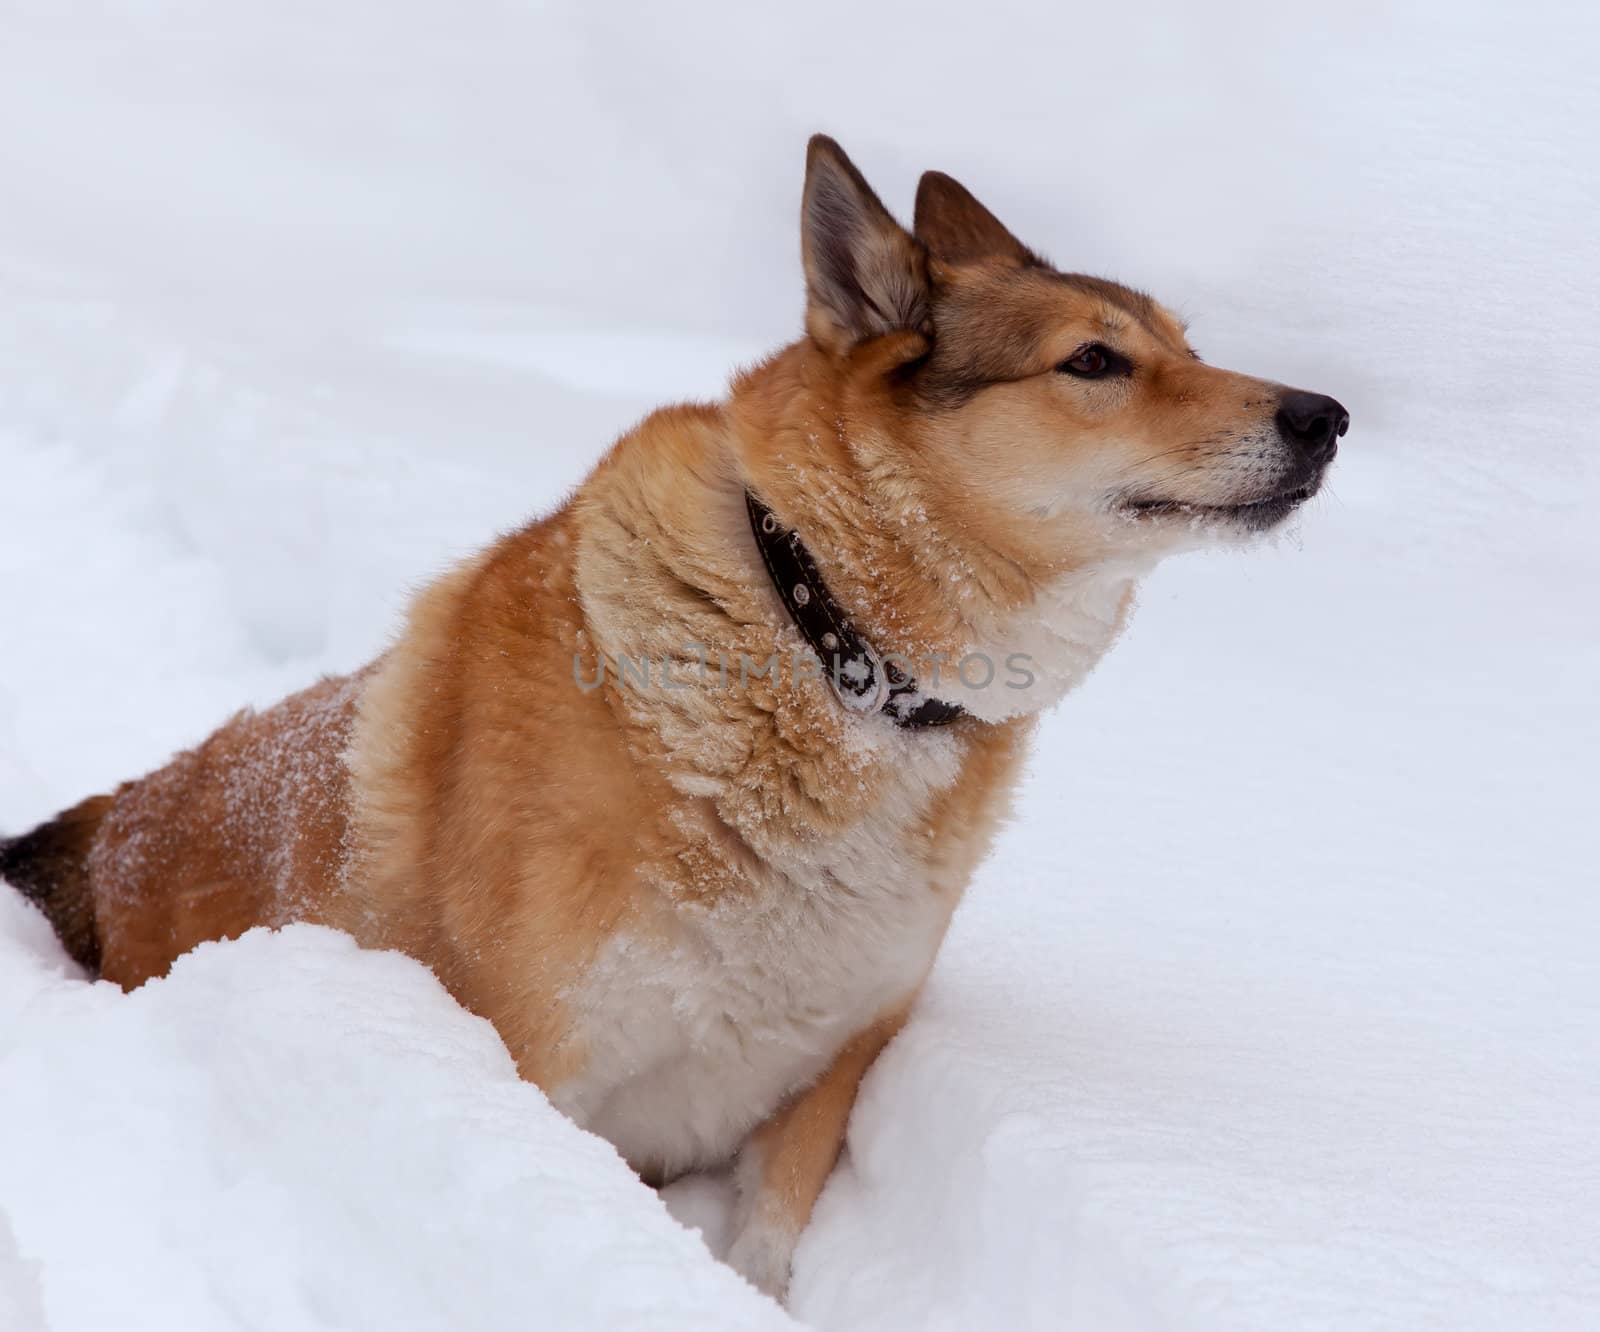 Red dog on the winter hunt sensed game